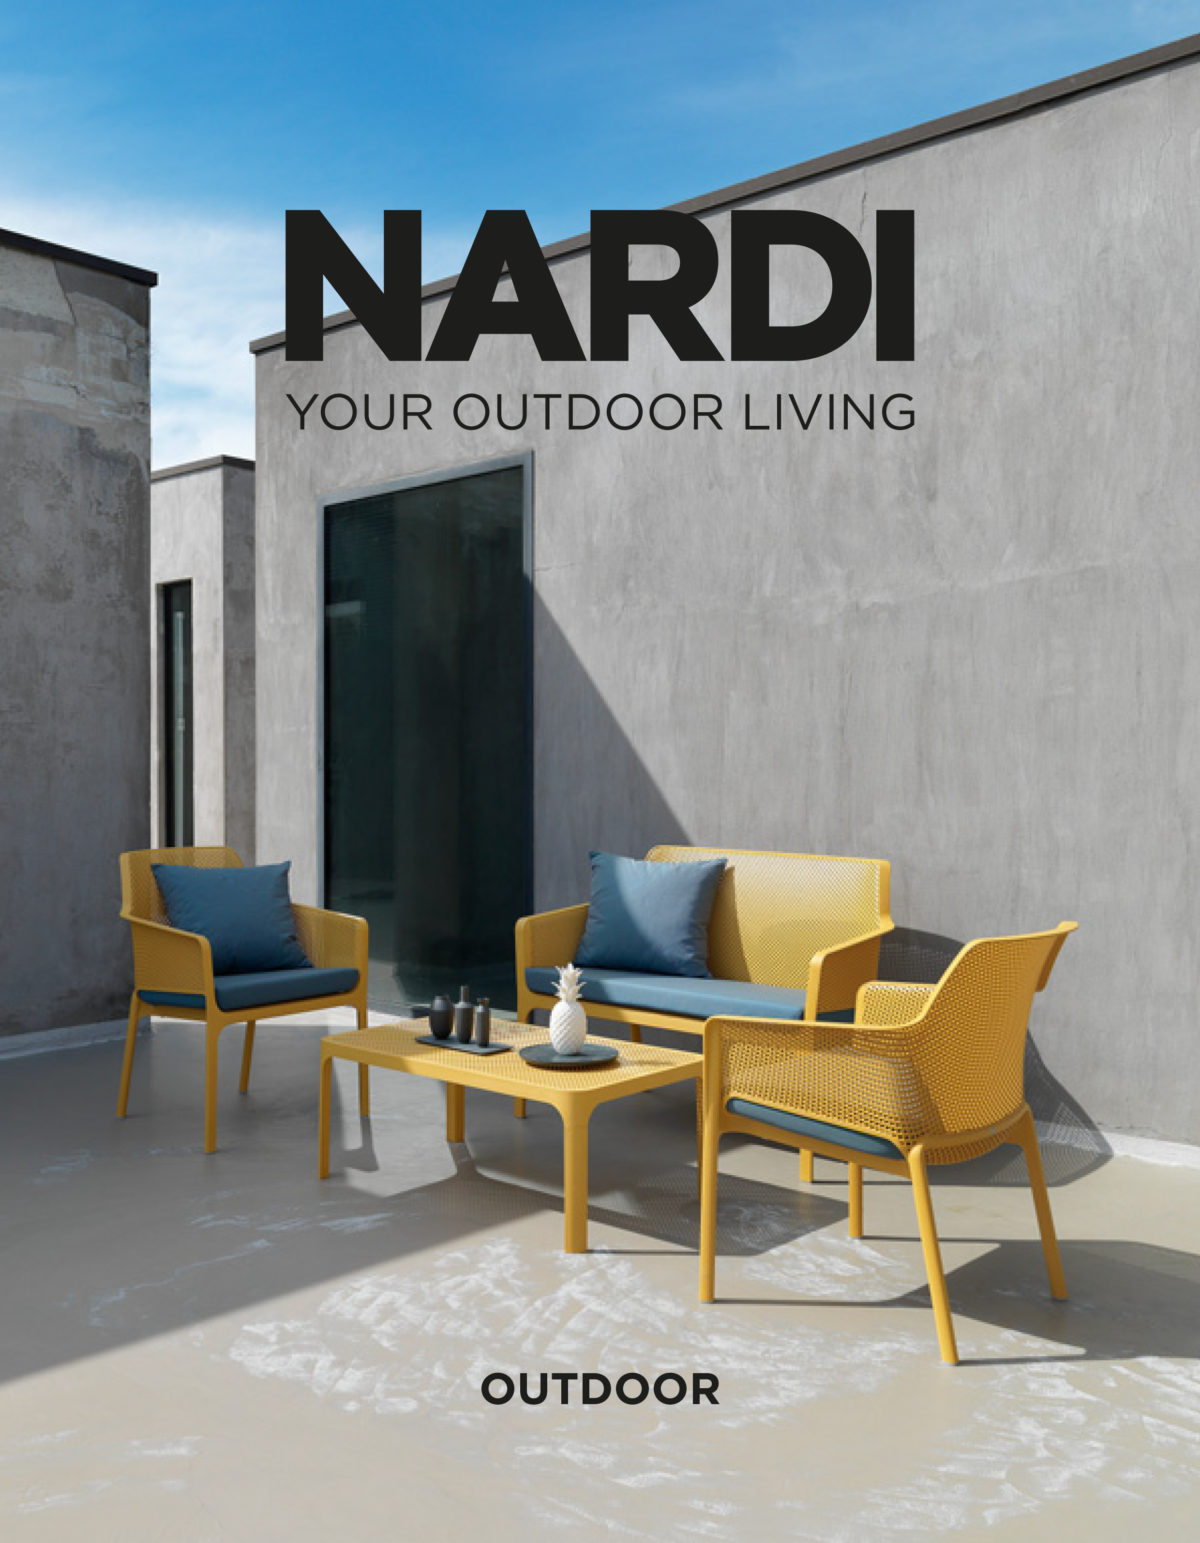 Nardi: Your Outdoor Living